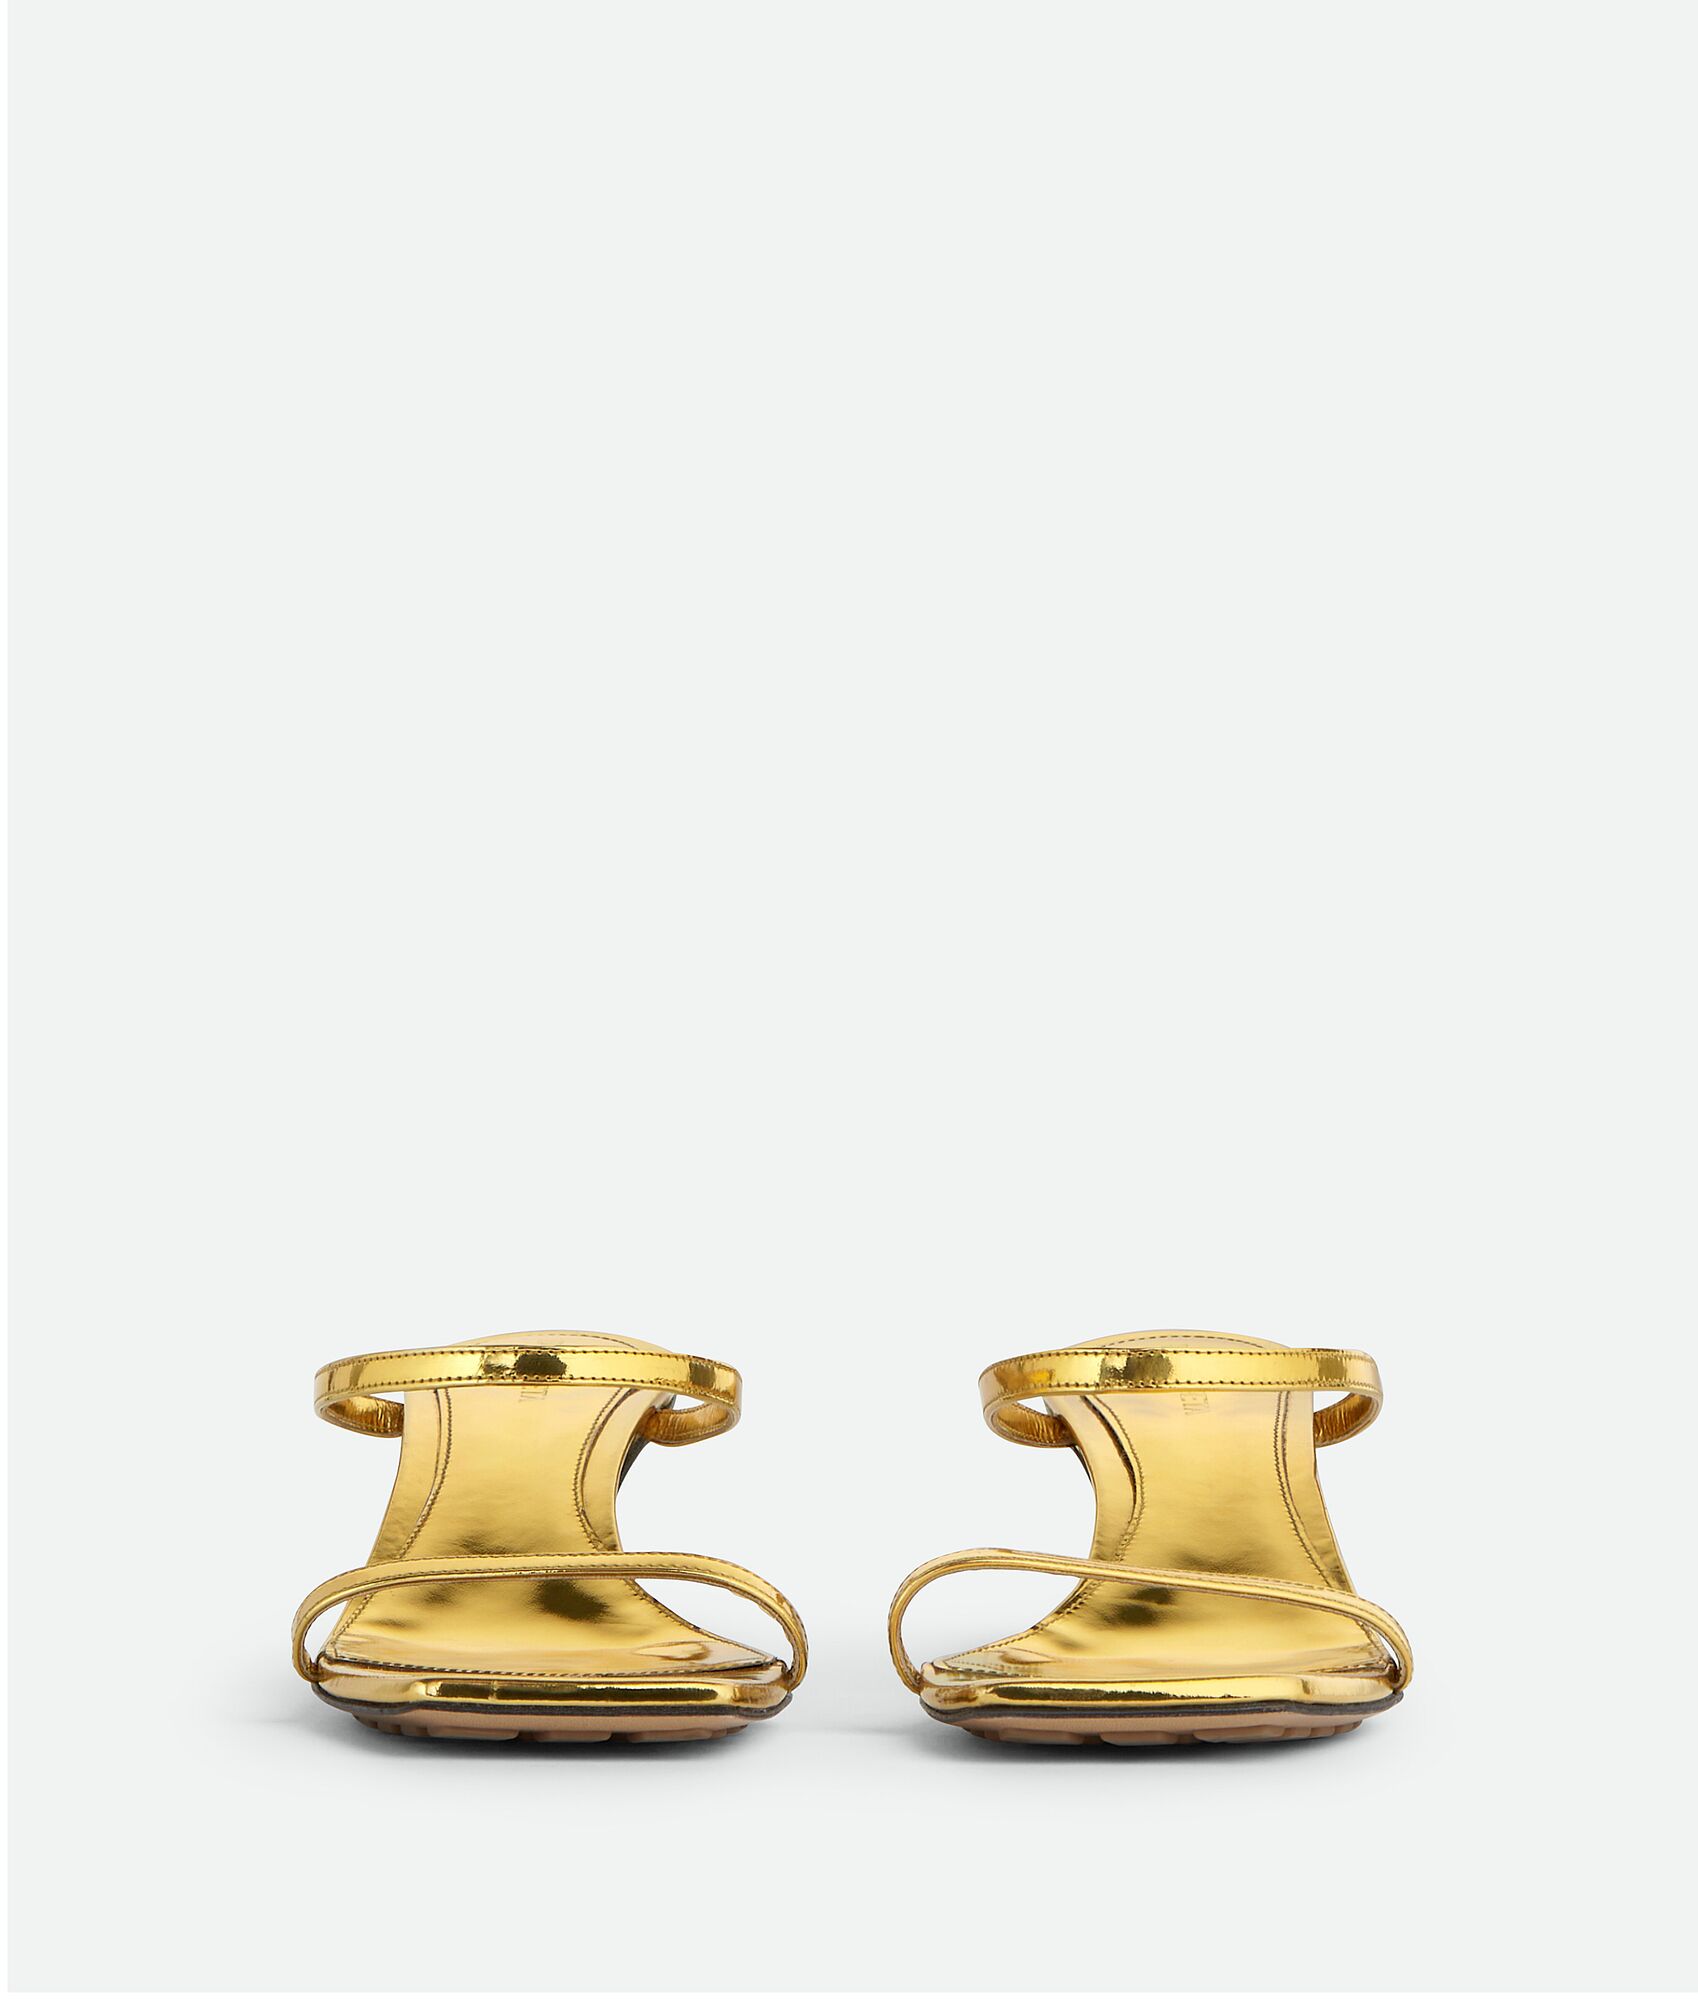 Bottega Veneta® Women's Knot Mule in Gold. Shop online now.